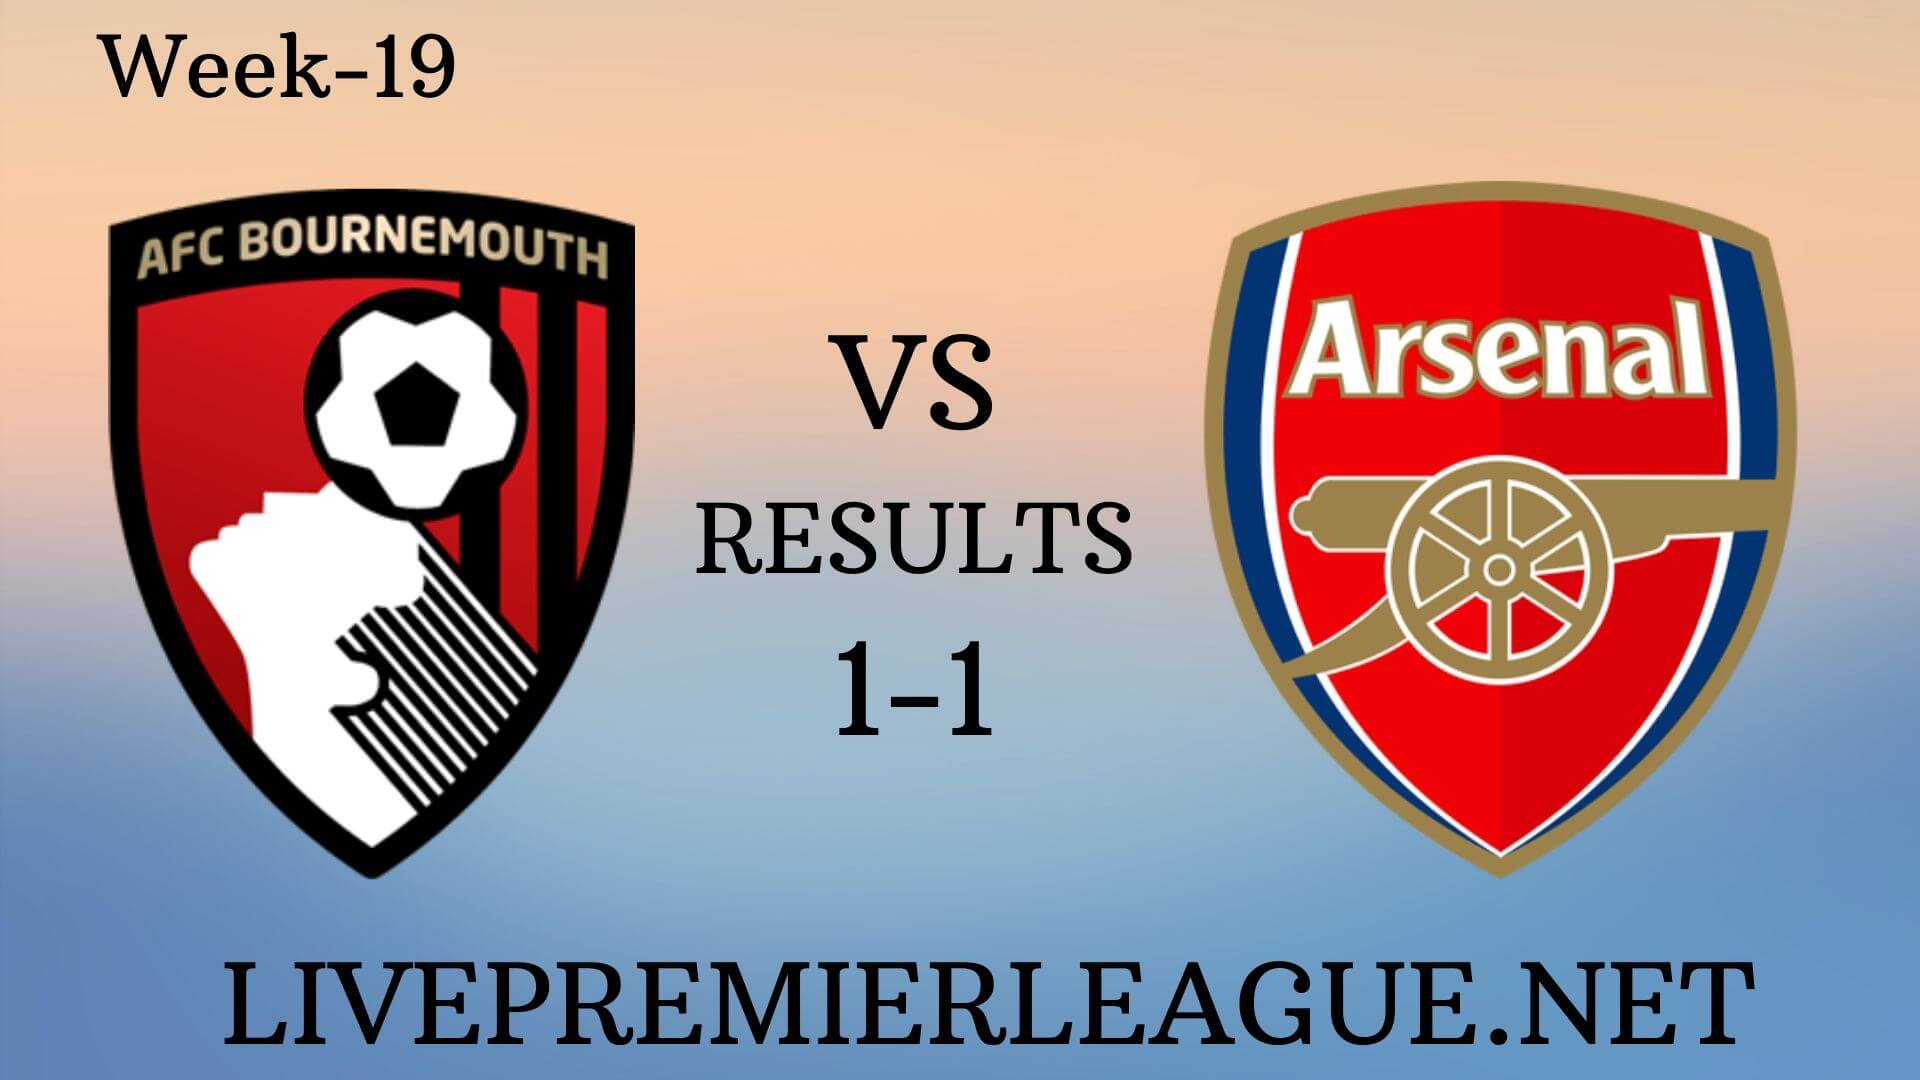 AFC Bournemouth Vs Arsenal | Week 19 Result 2019